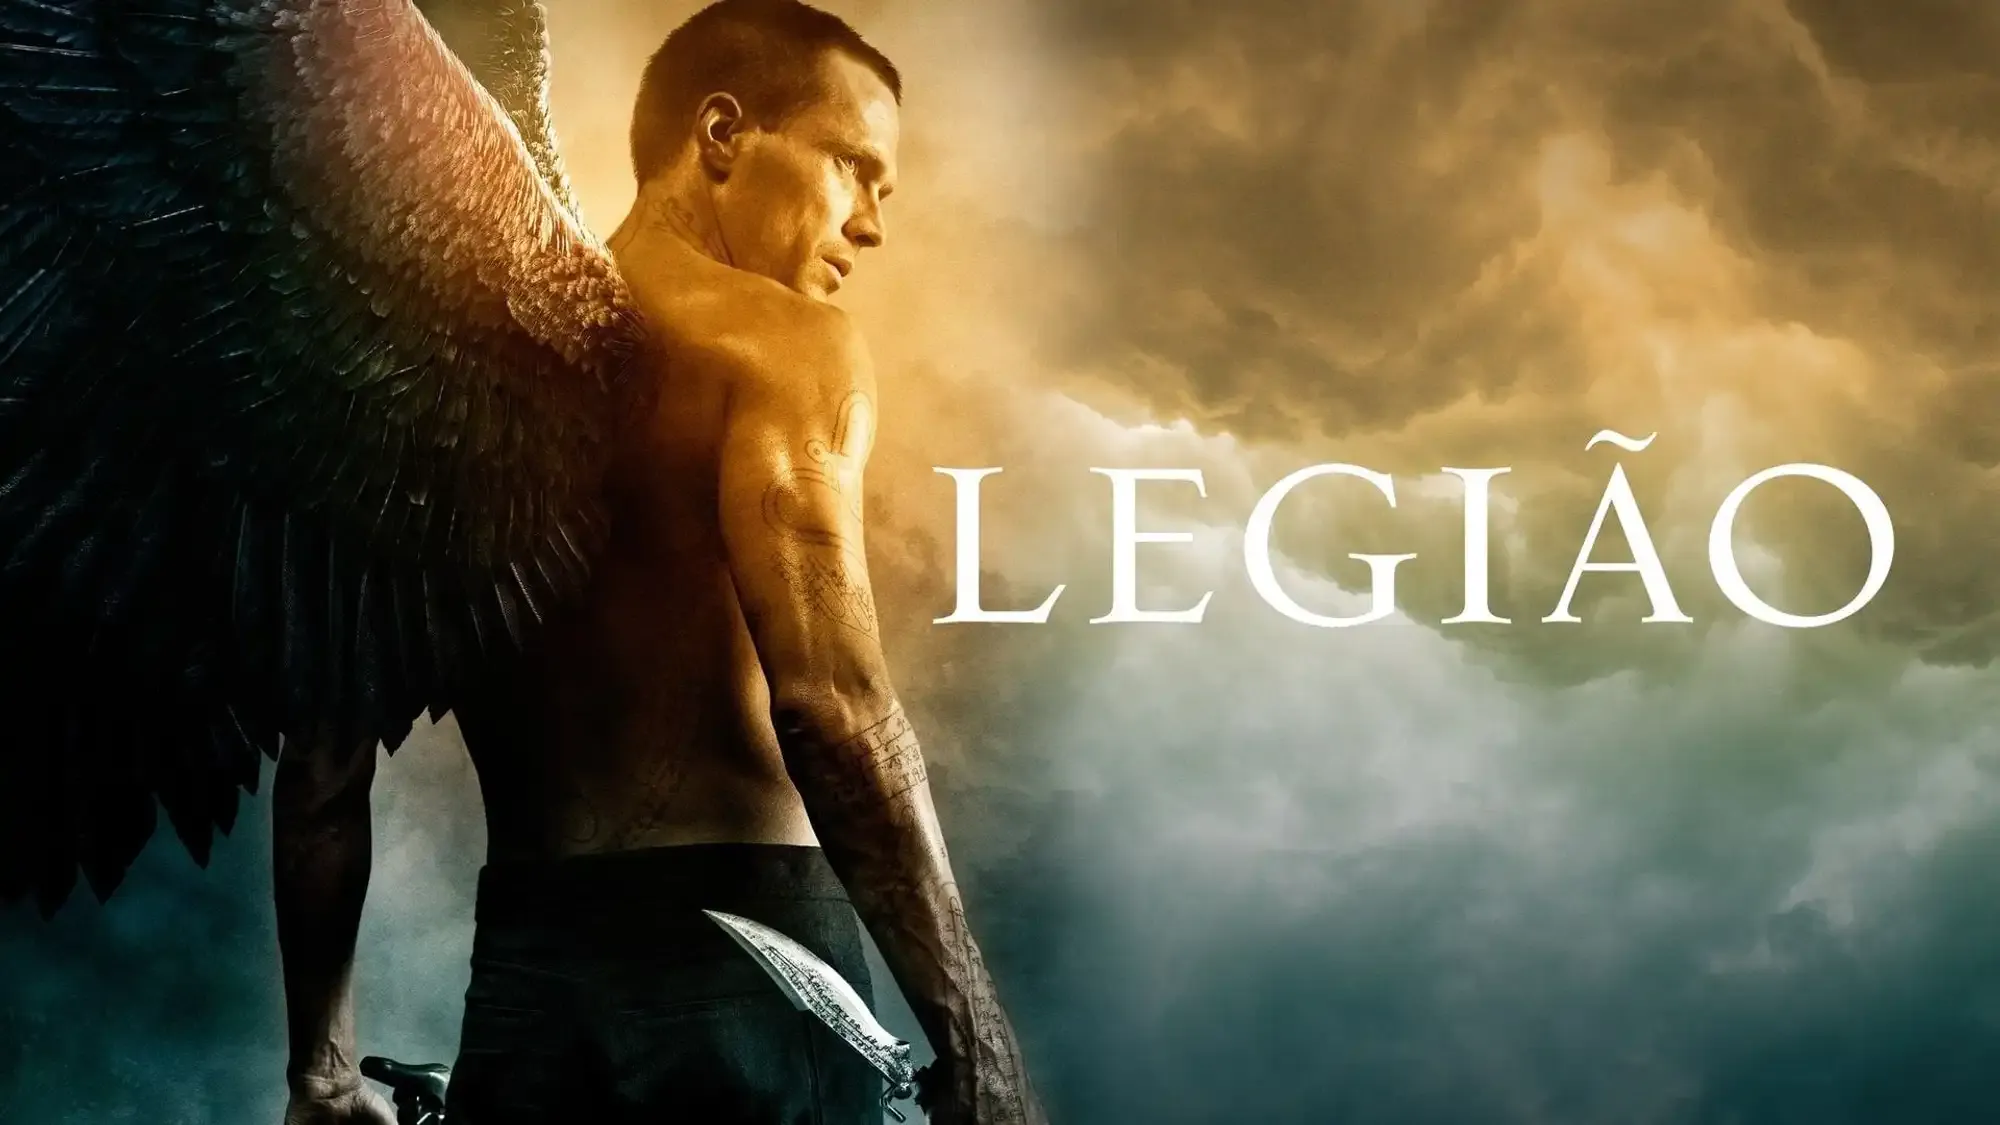 Legion movie review